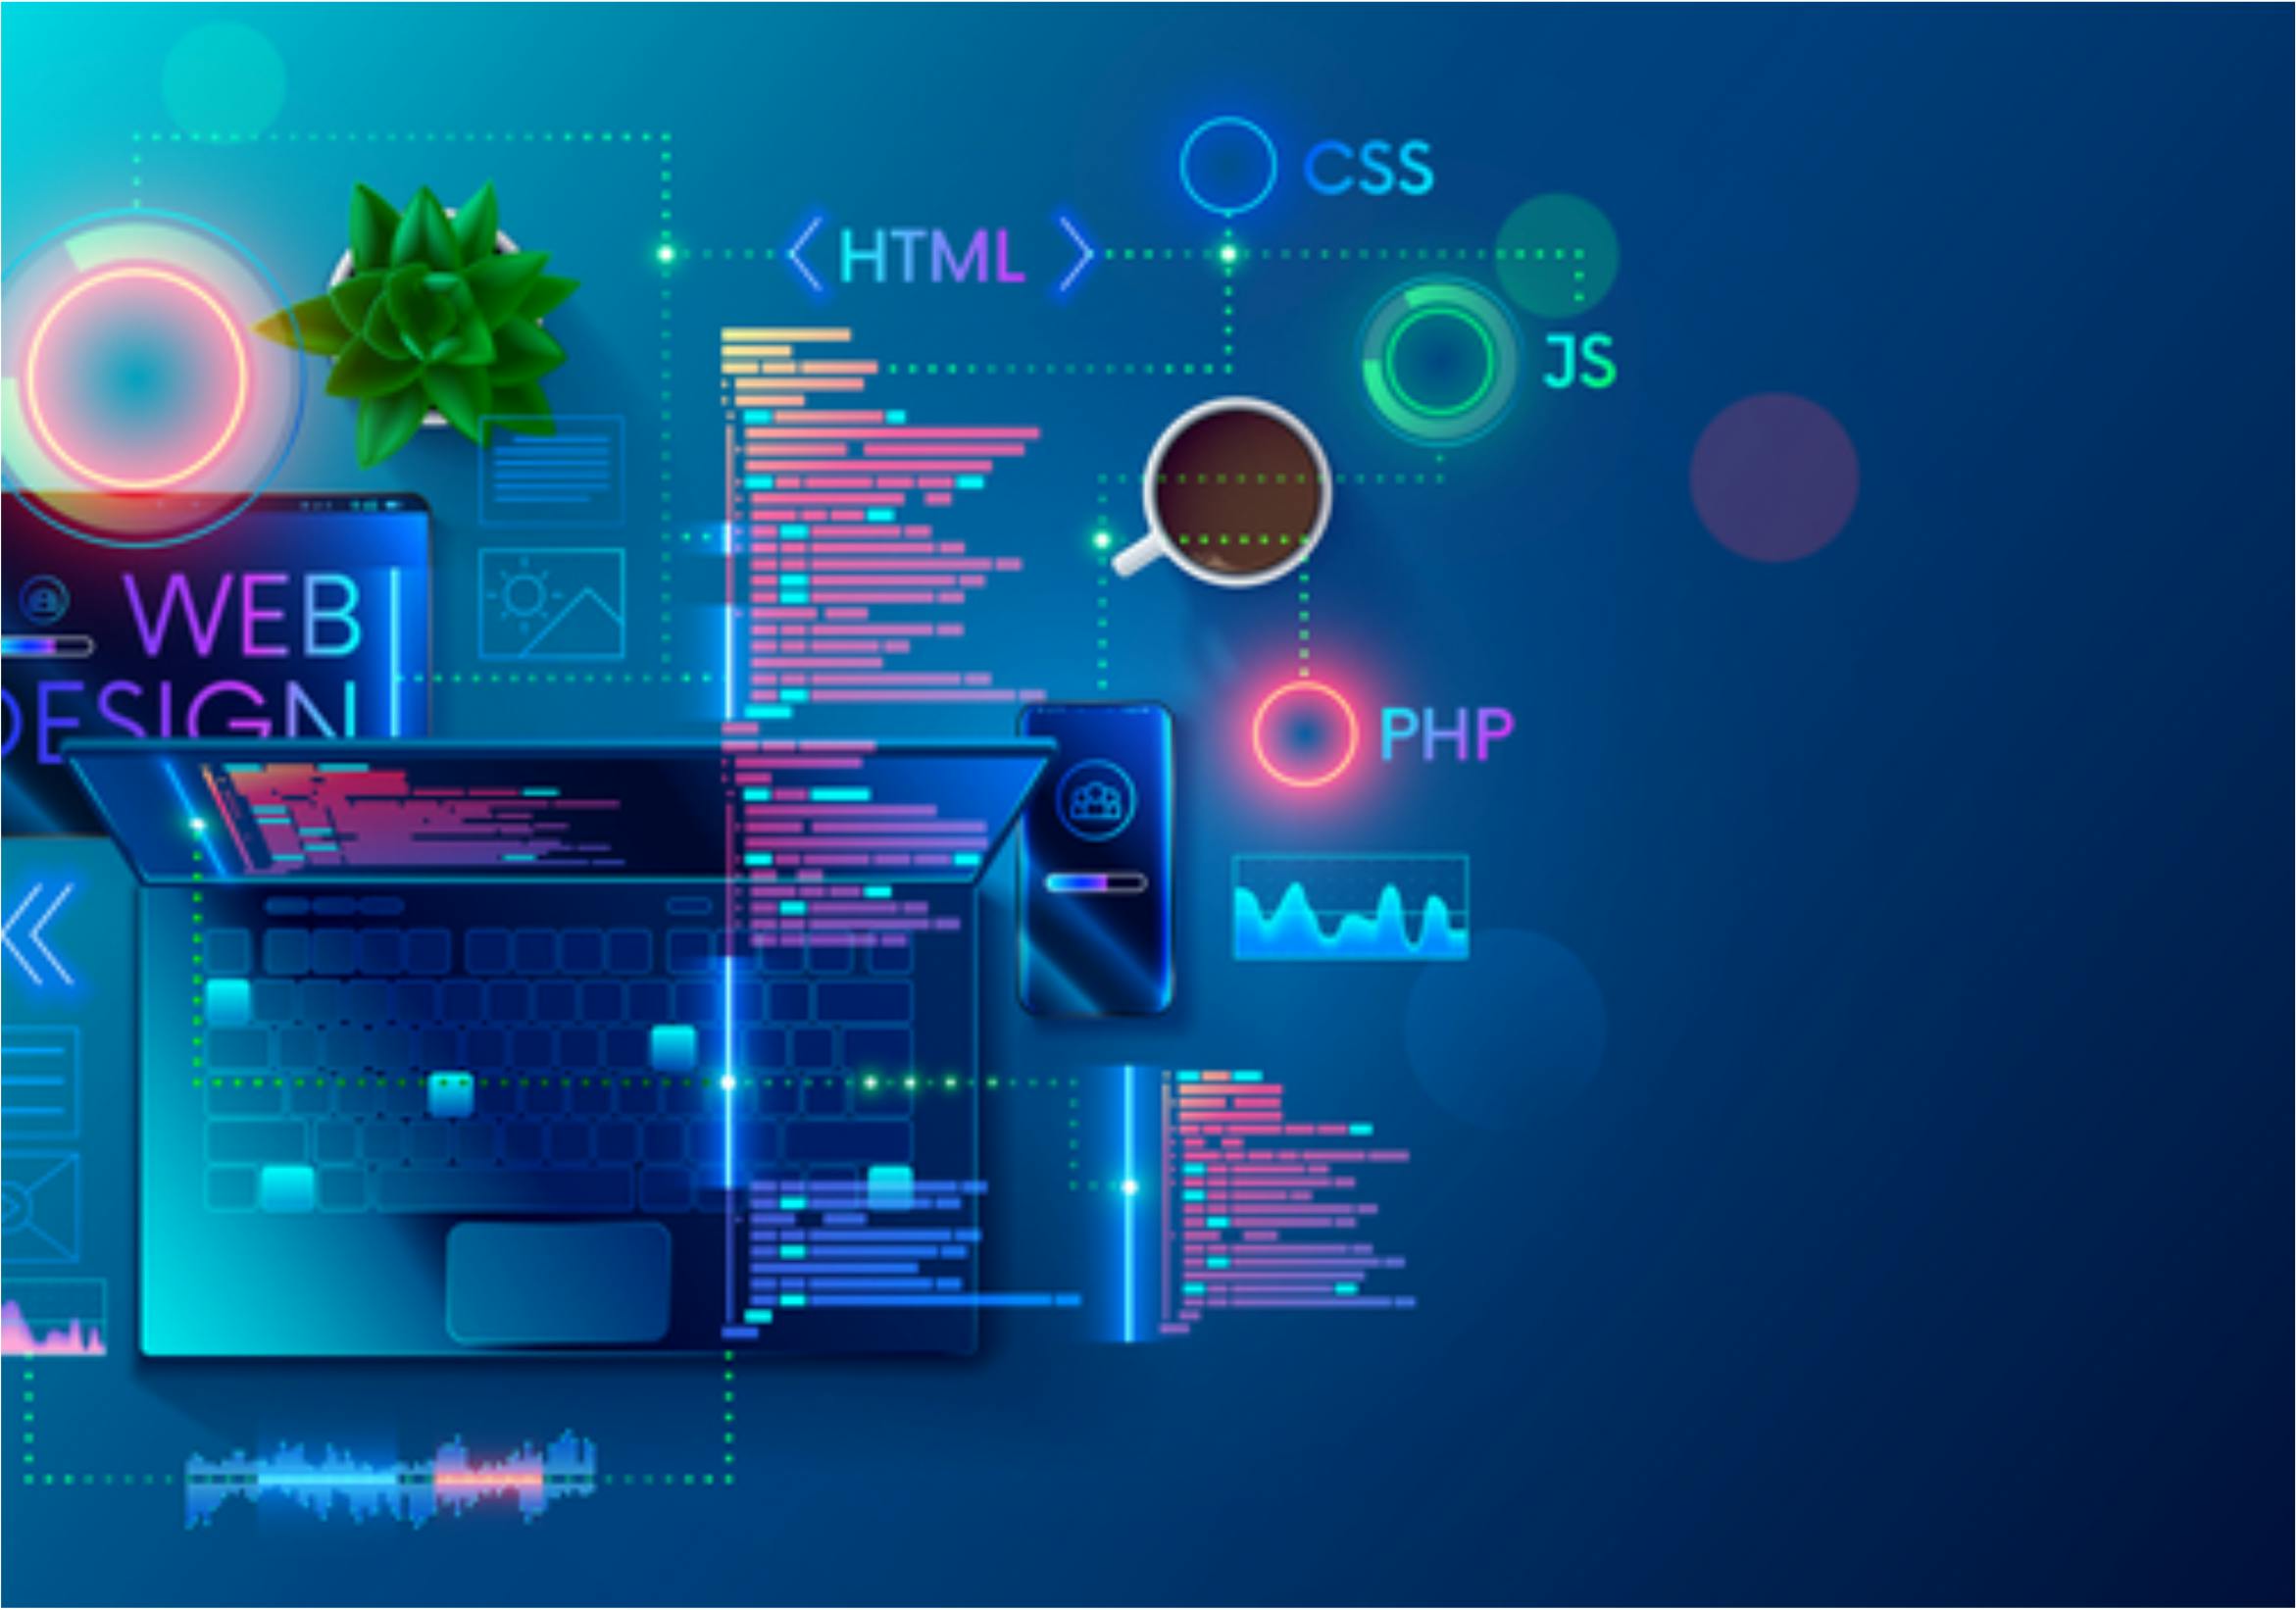 web design illustration with different coding languages